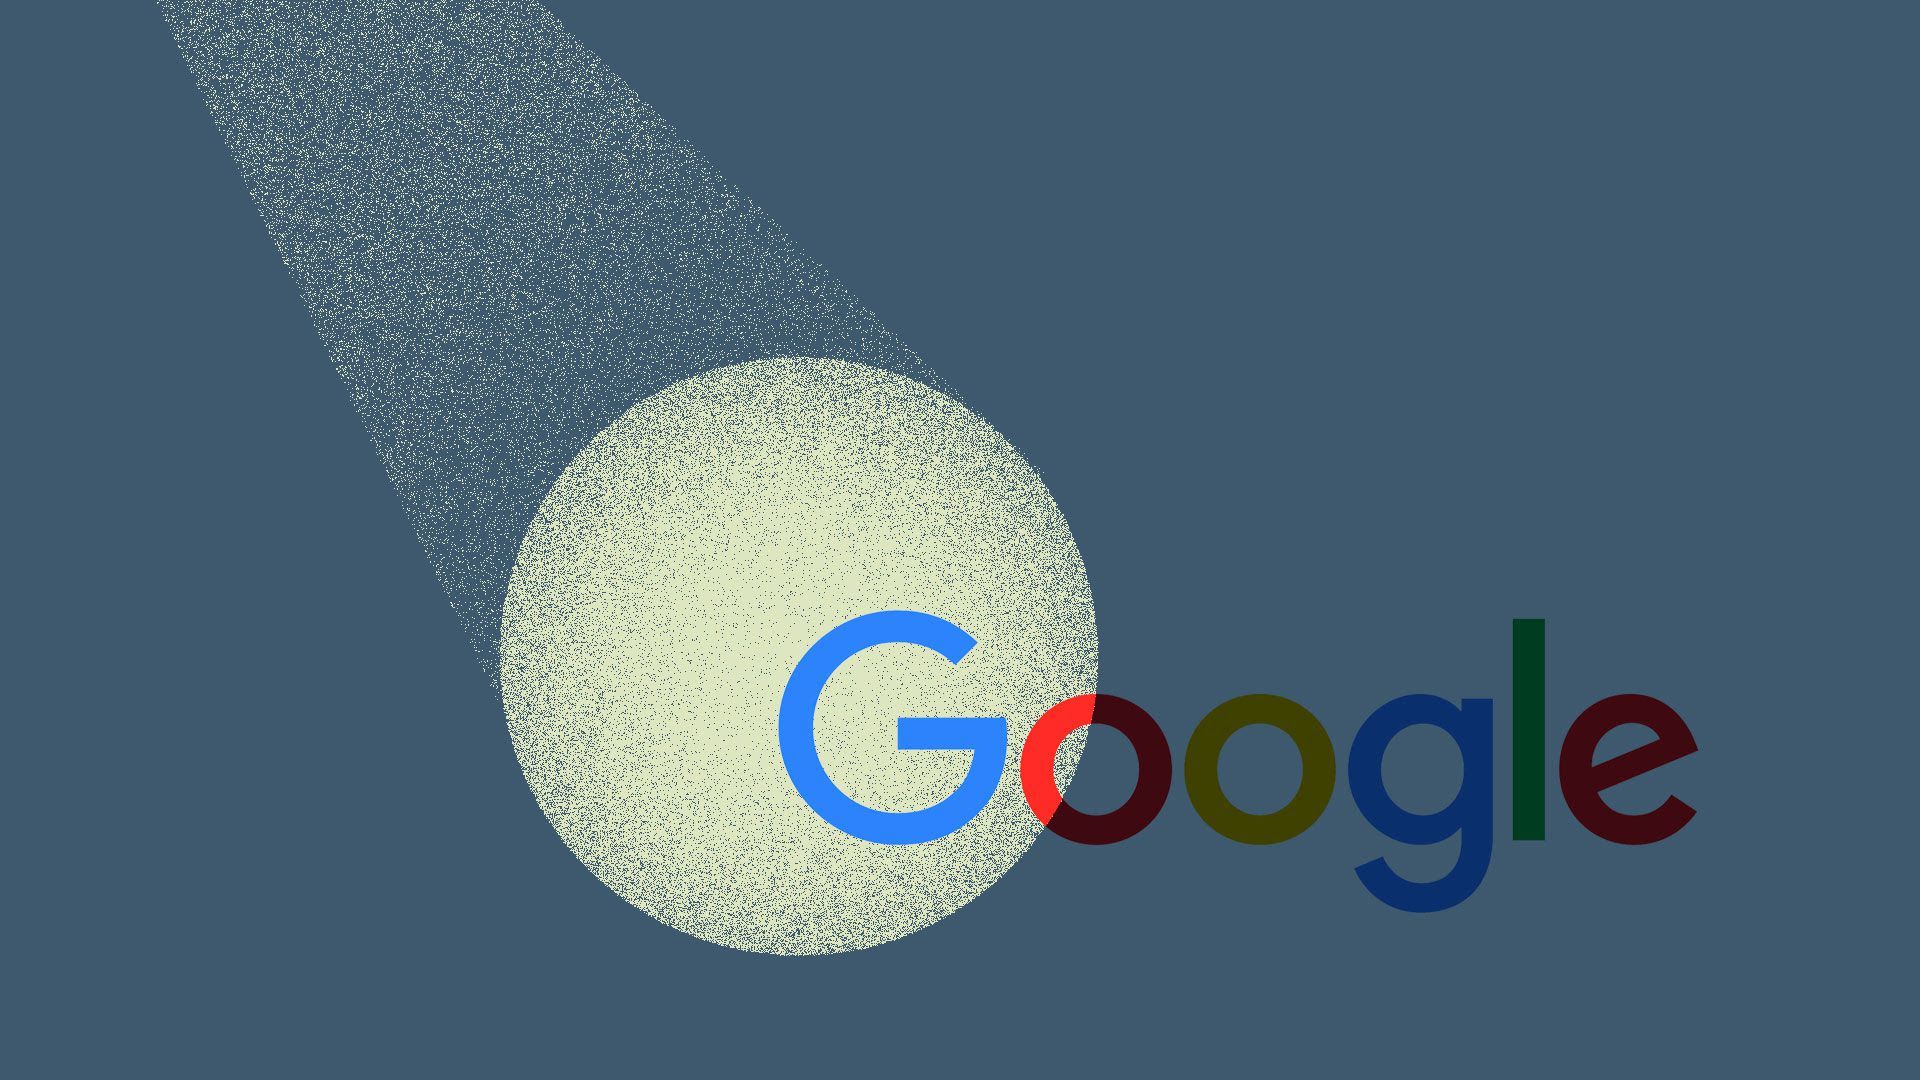 Google is in the spotlight 